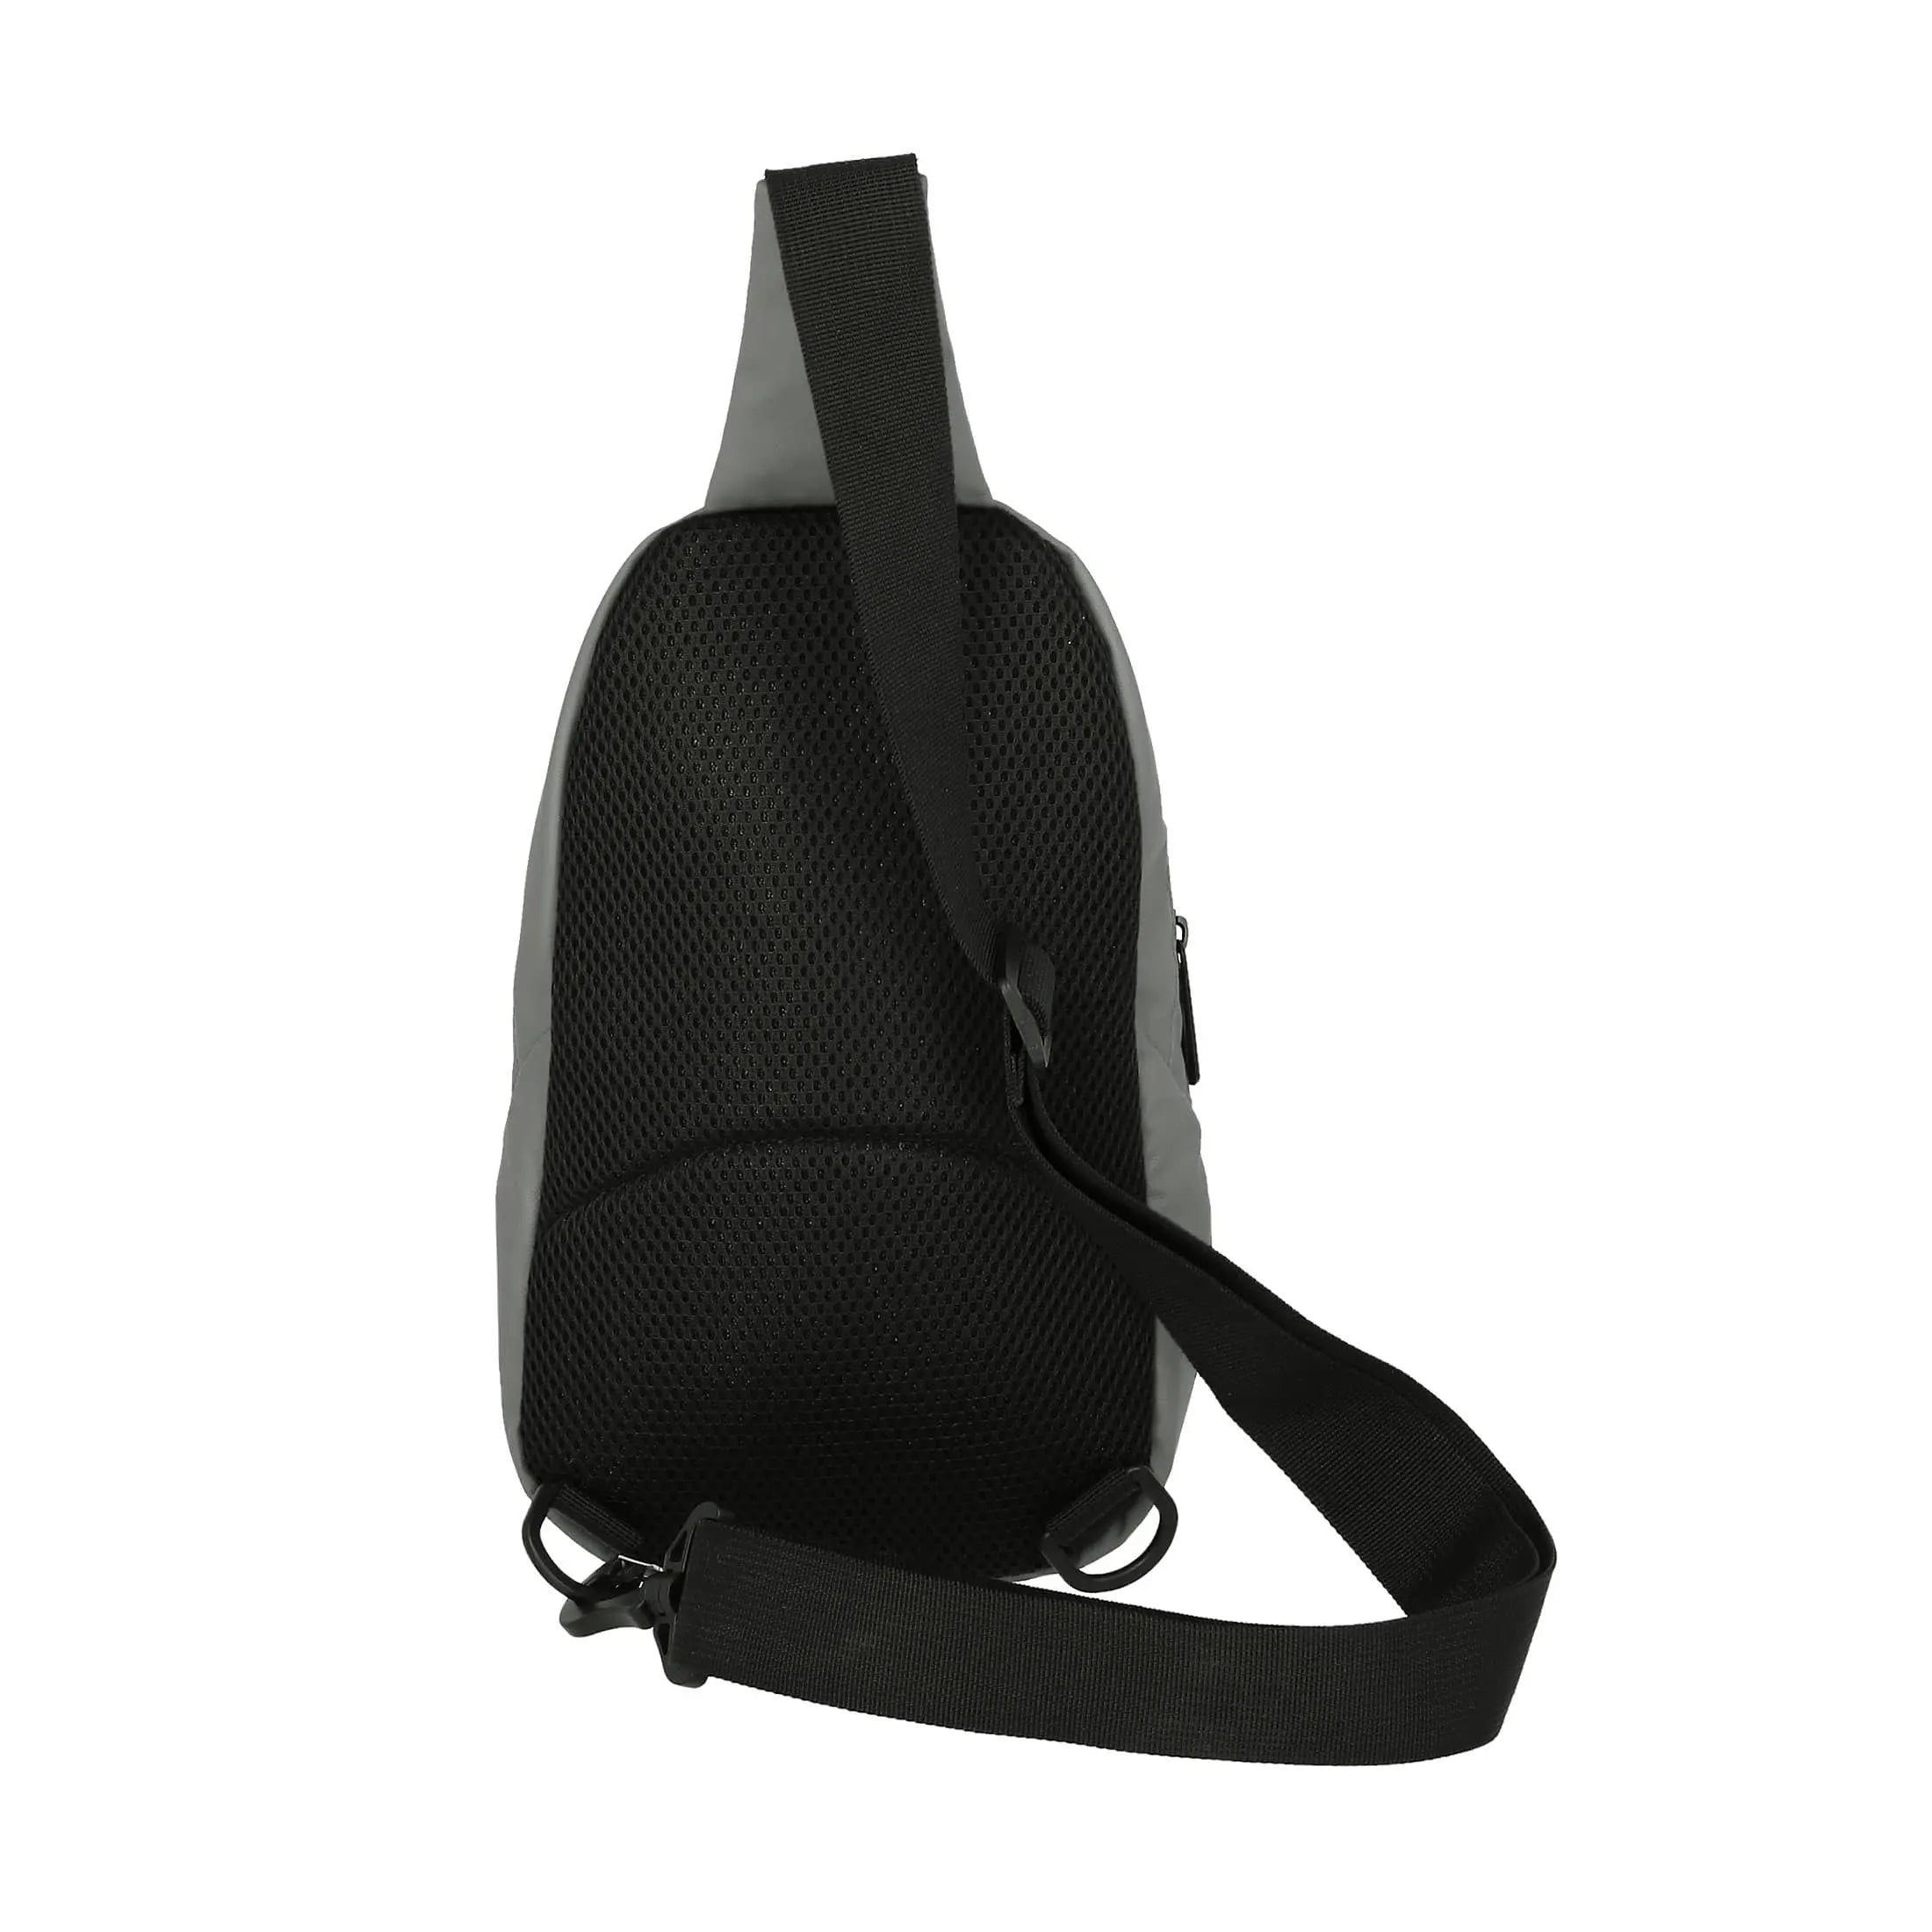 Travelite Basics Crossover Backpack Tarpaulin 29 cm - Red